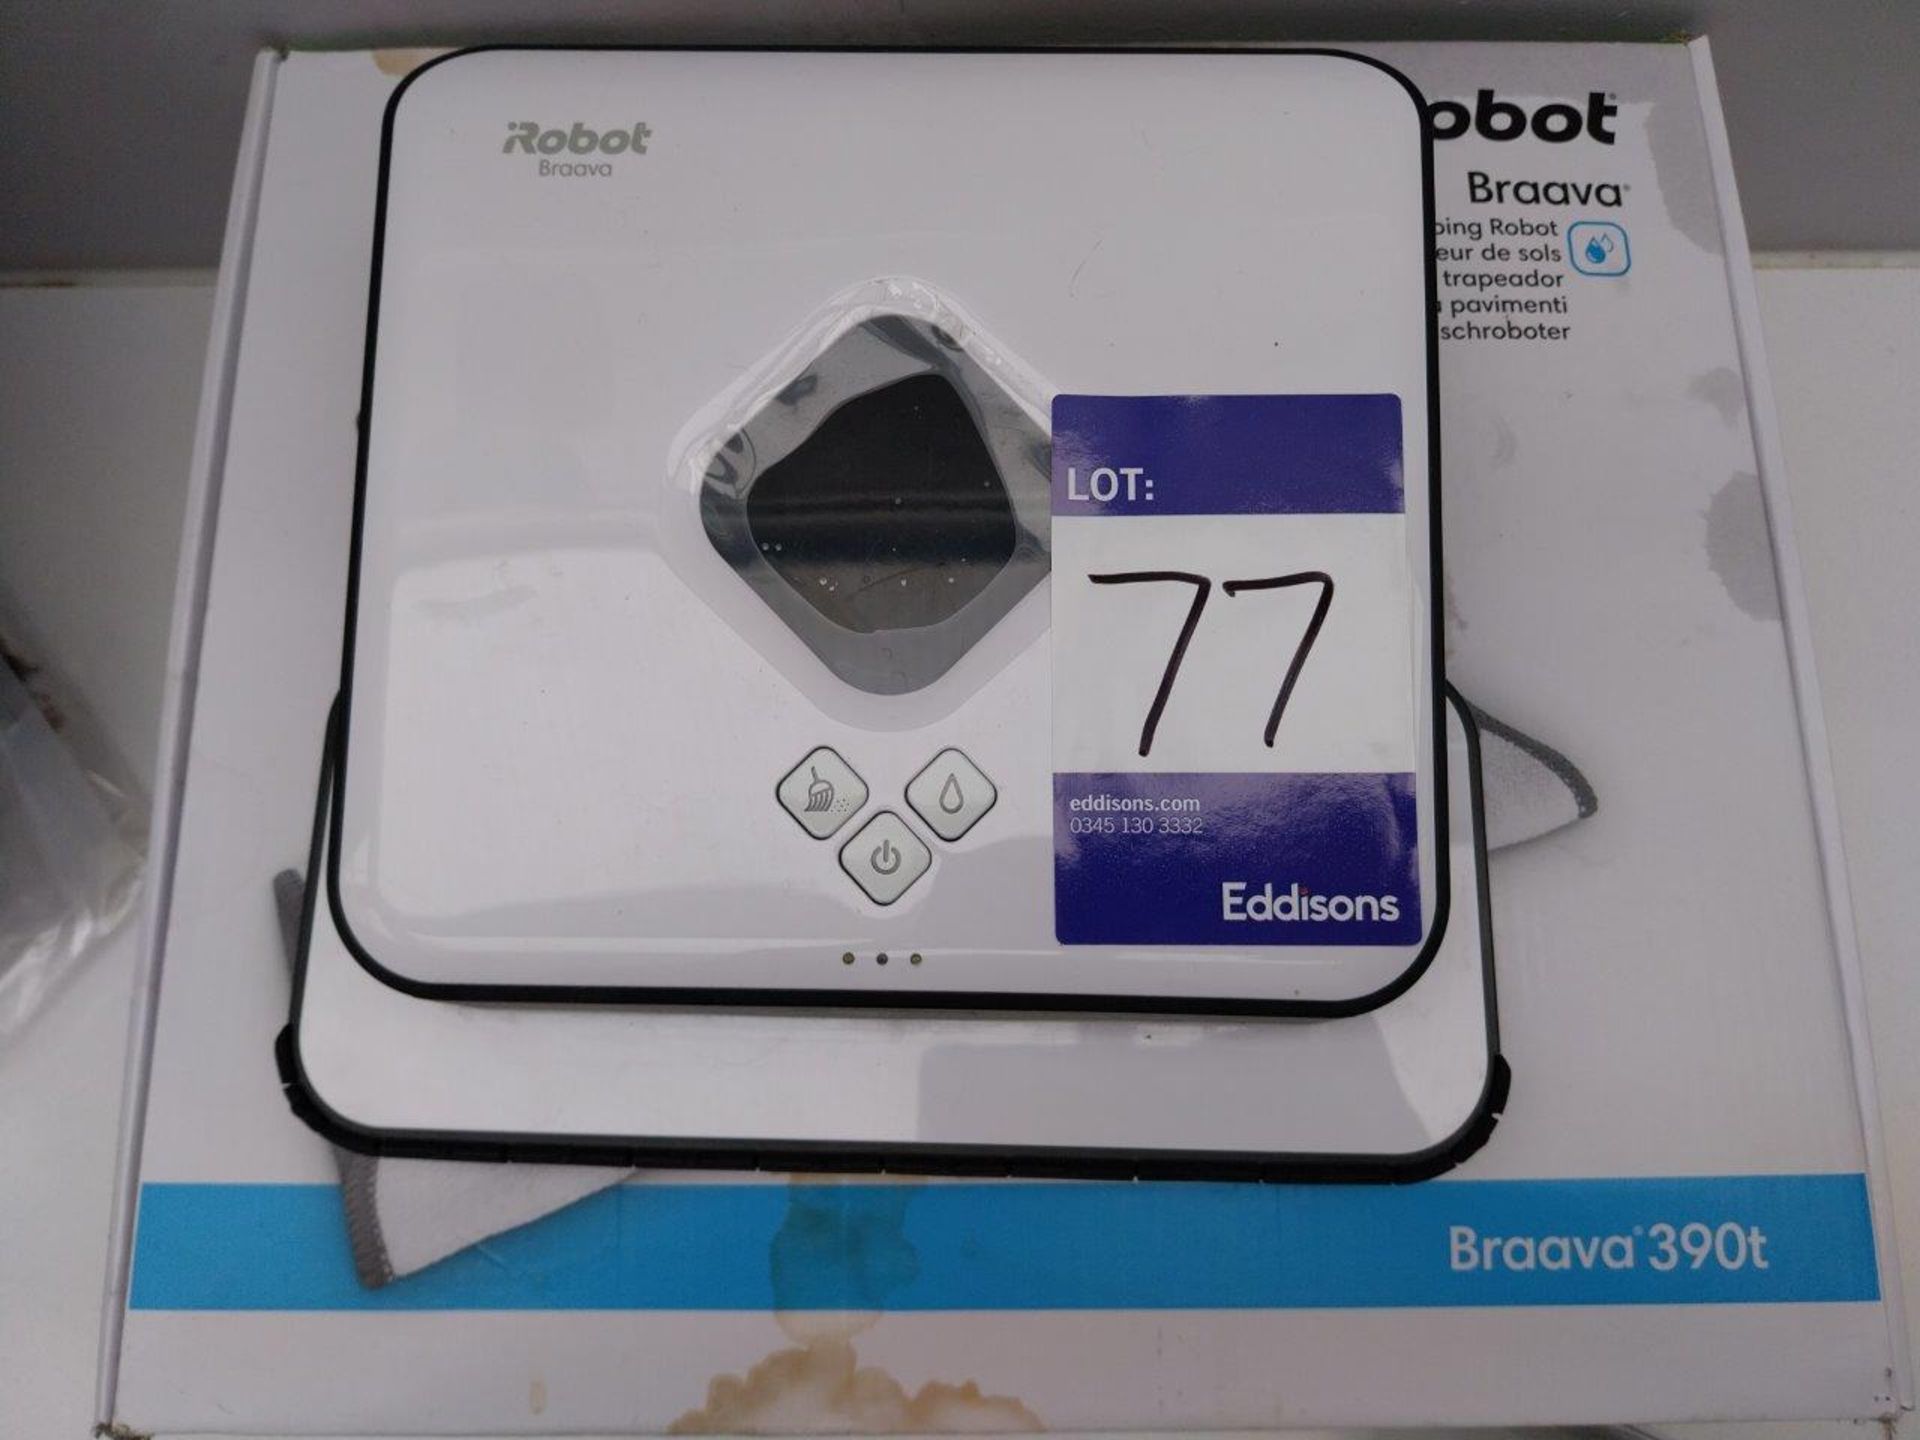 IROBOT Braava 390t Vacuum Cleaner - Image 2 of 2